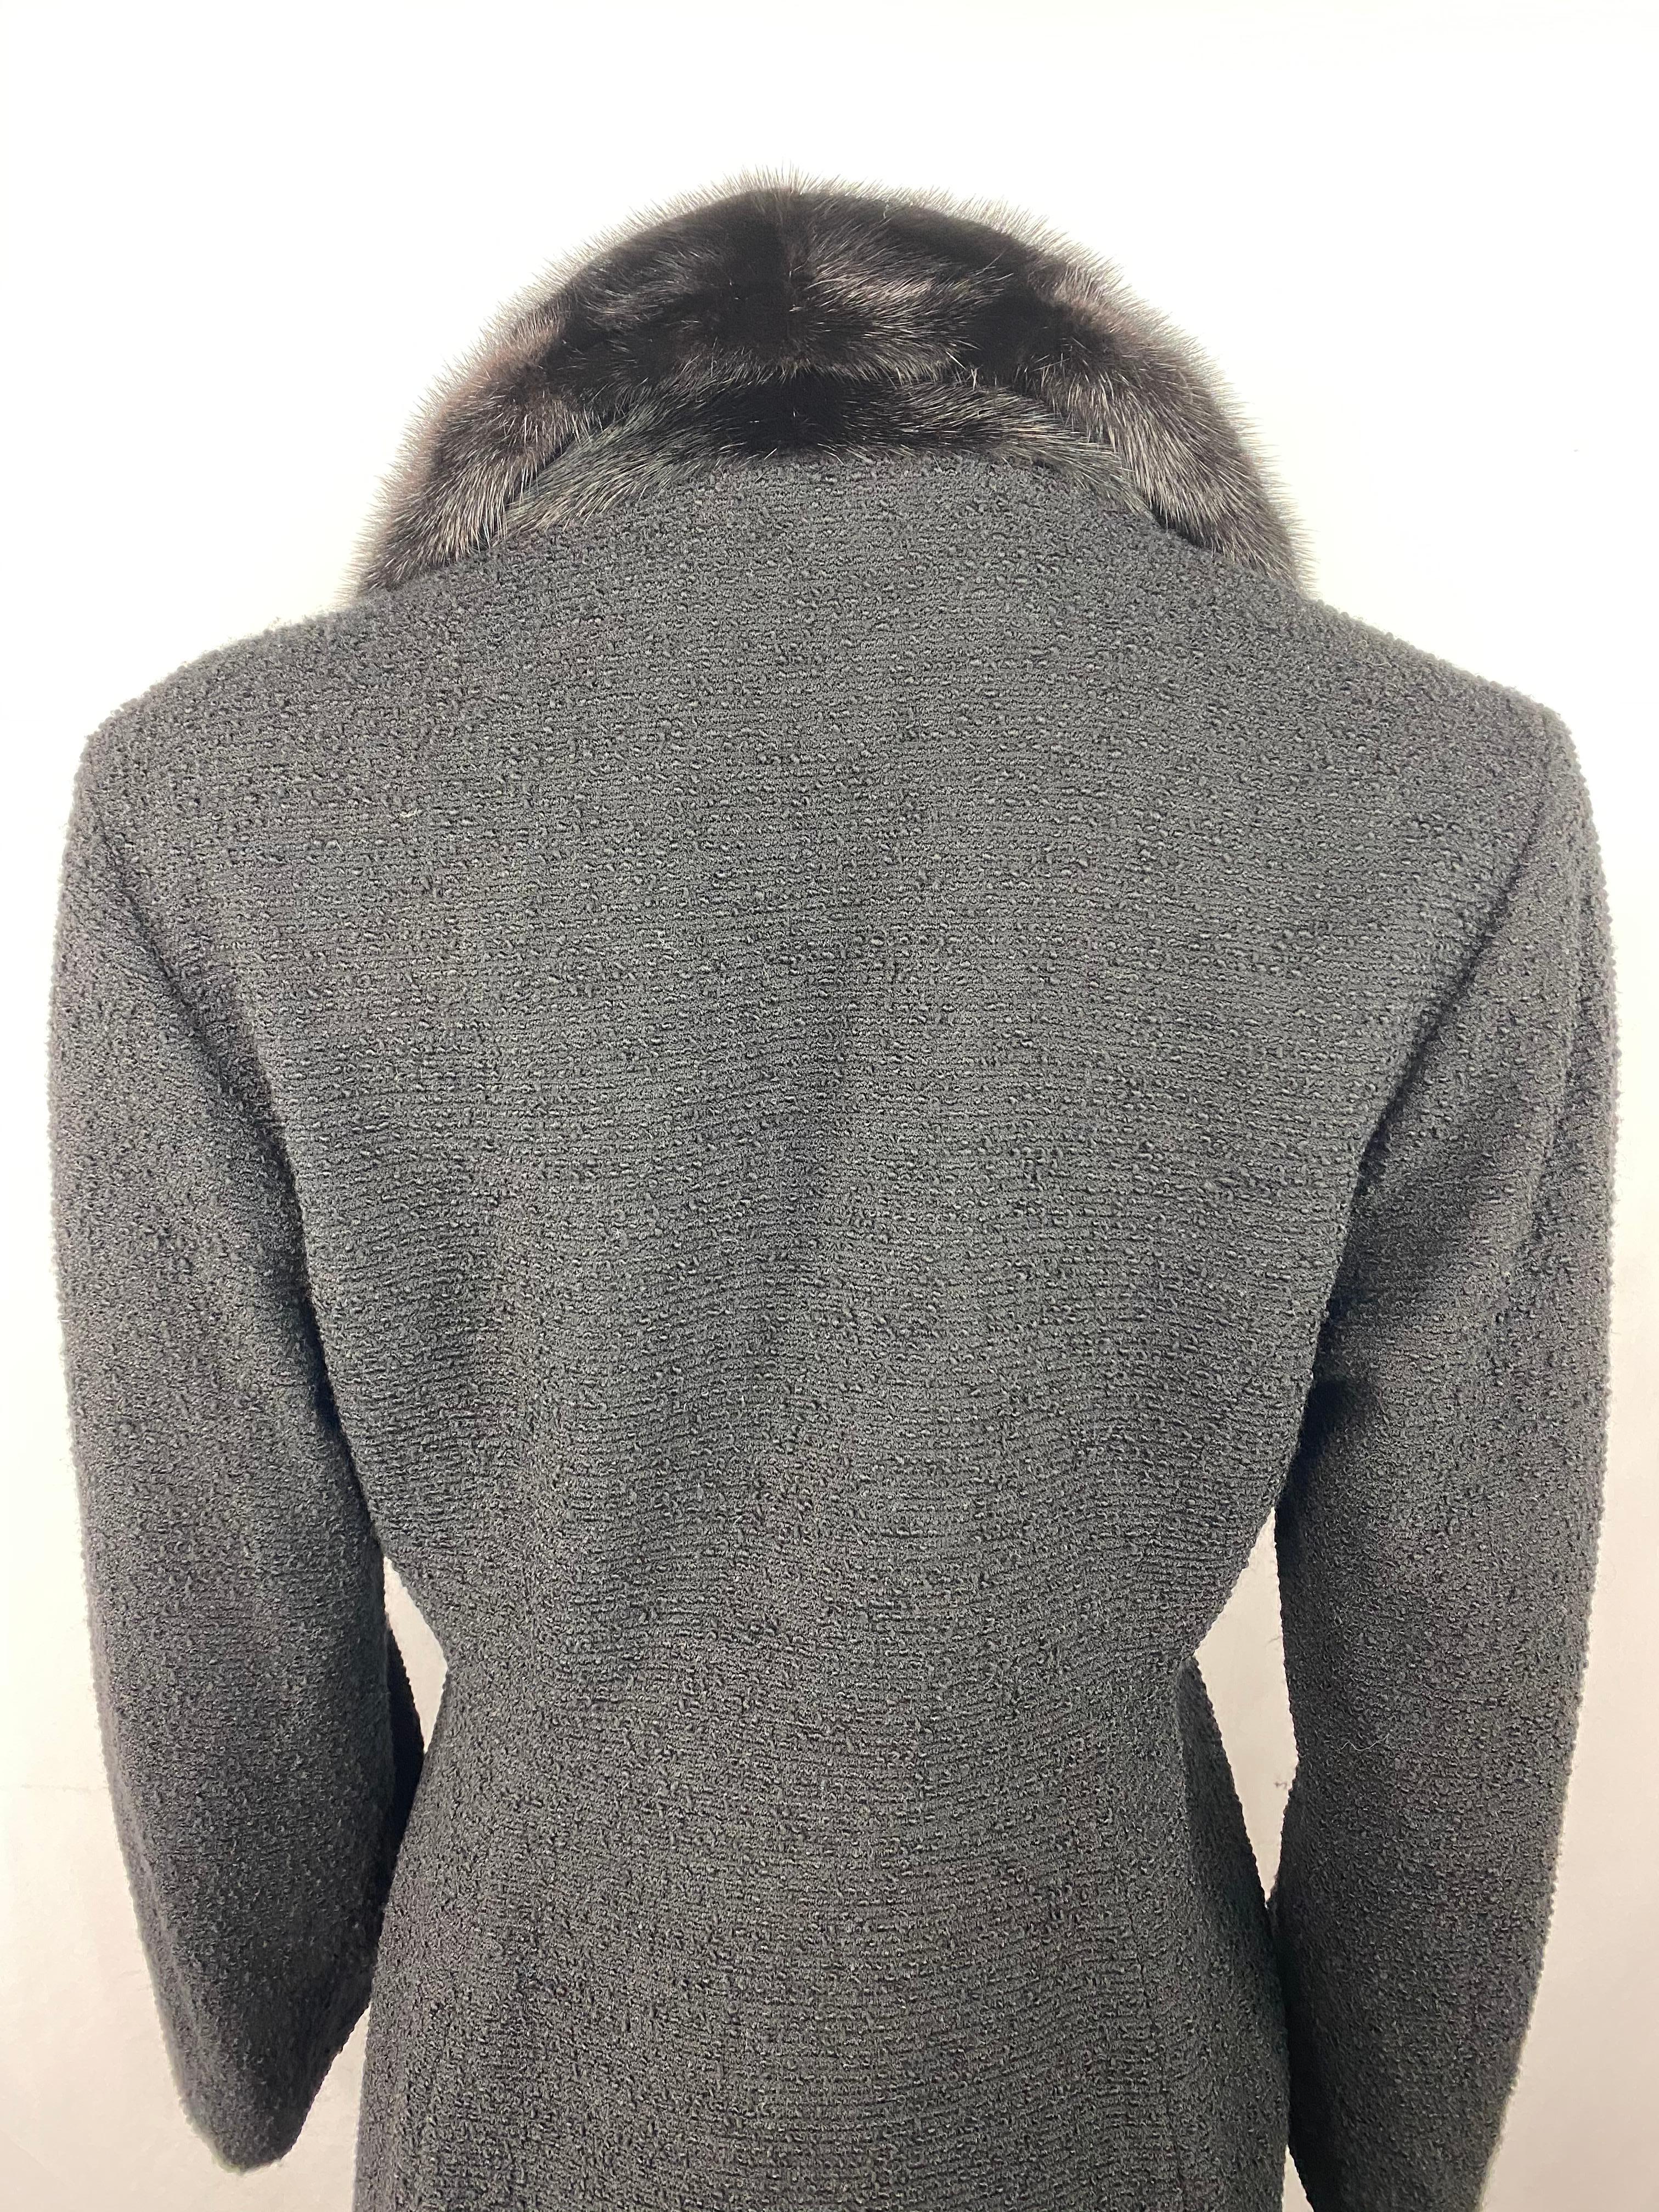 Christian Dior Black Wool Tweed and Fur Coat Jacket Size 40 3